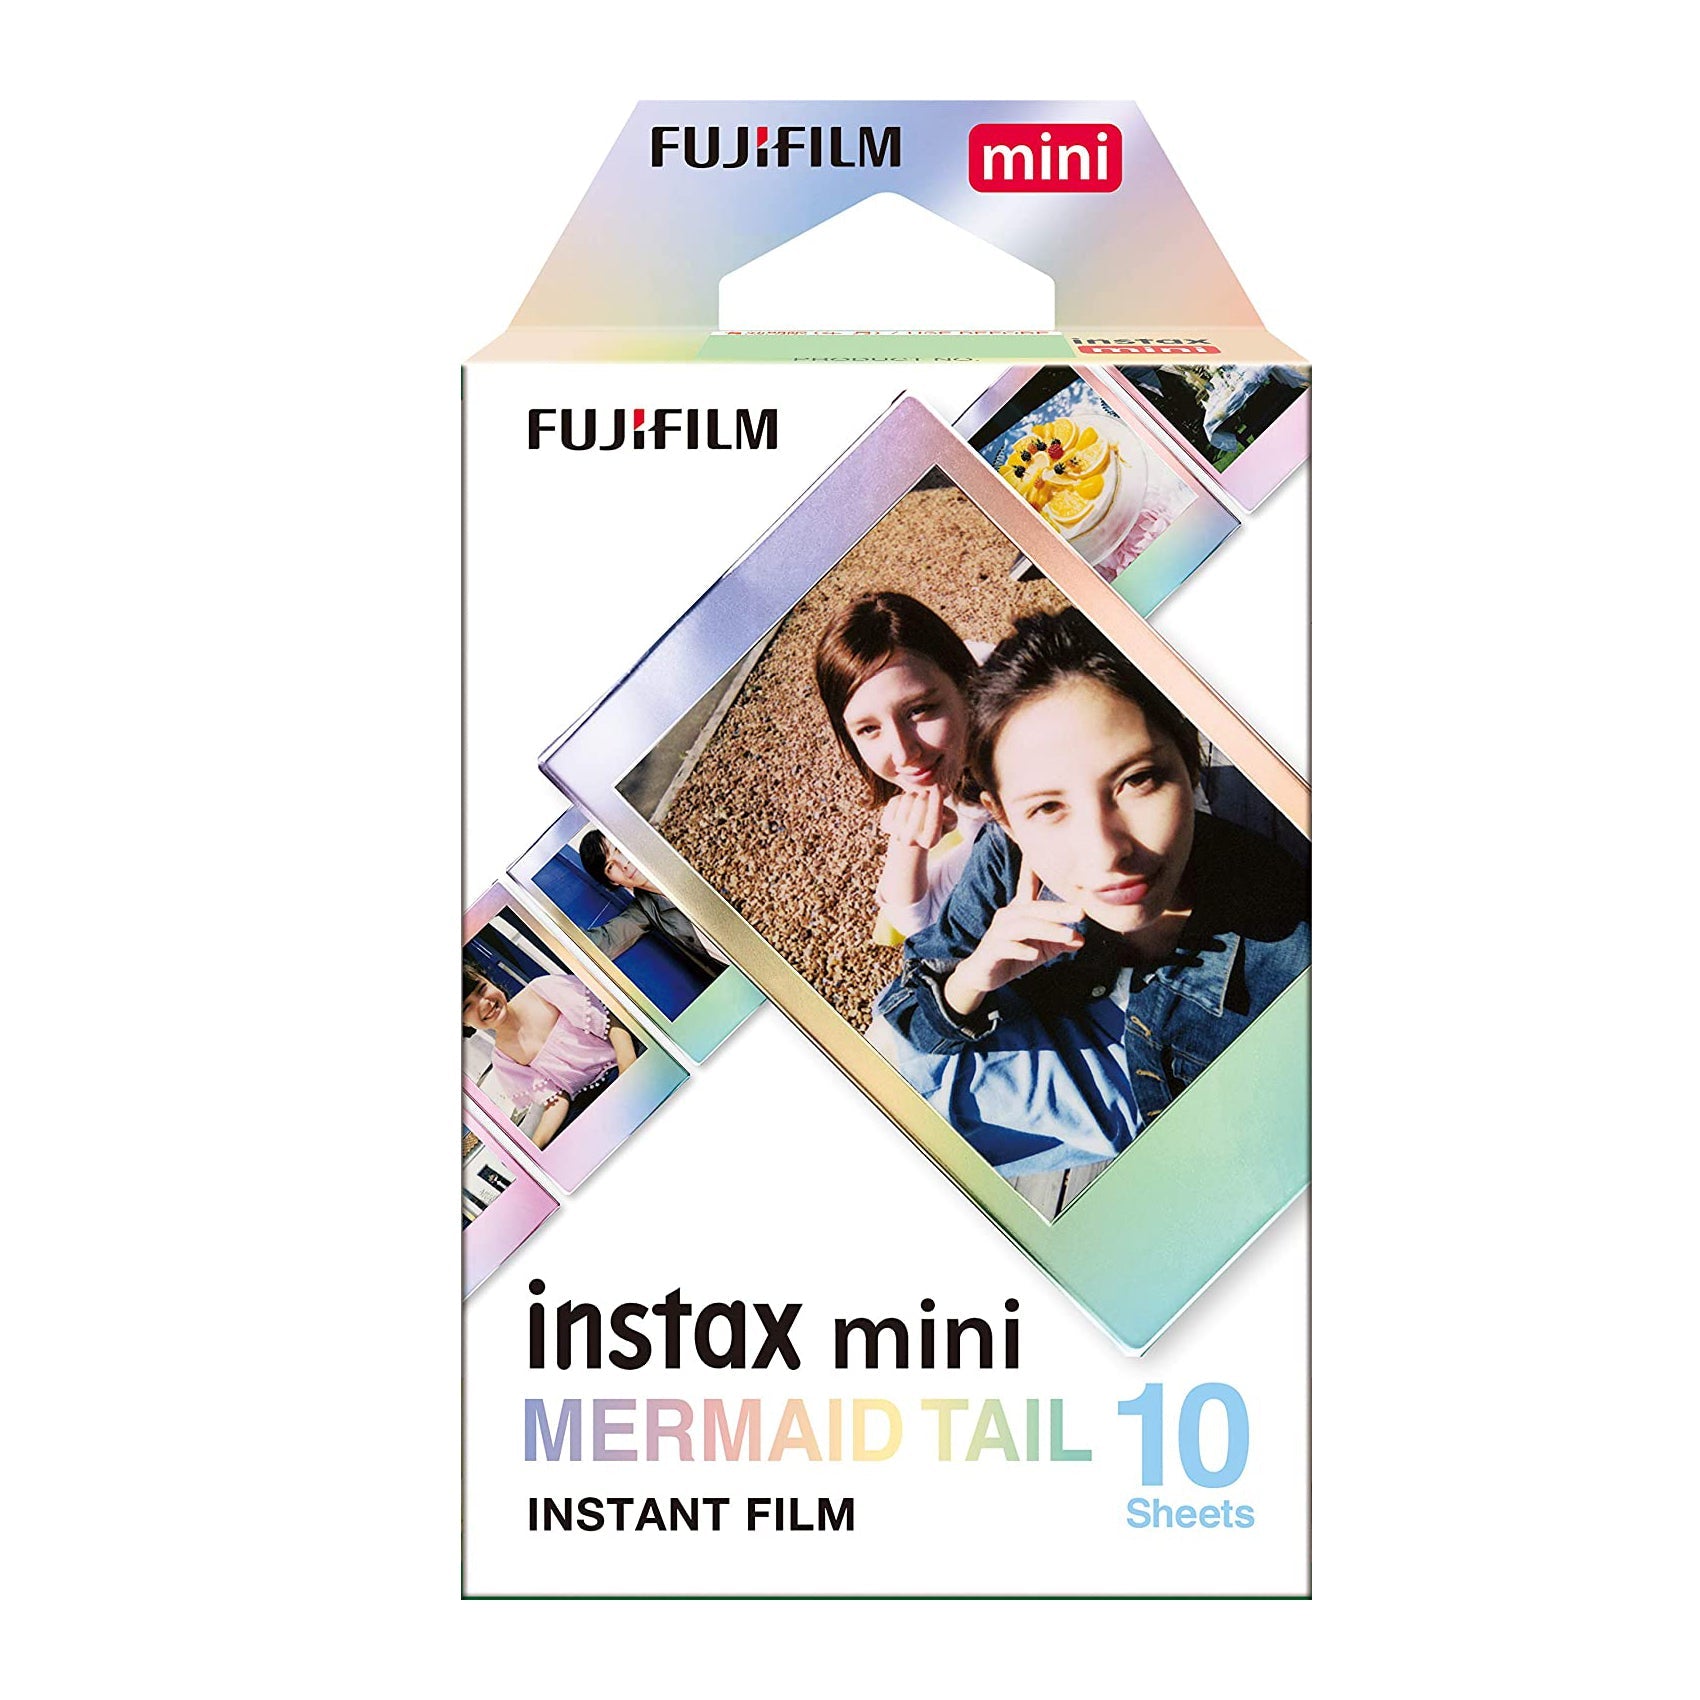 Fujifilm Instax Mini 10X1 mermaid tail Instant Film with 96-sheet Album for mini film  (Flamingo watermelon)